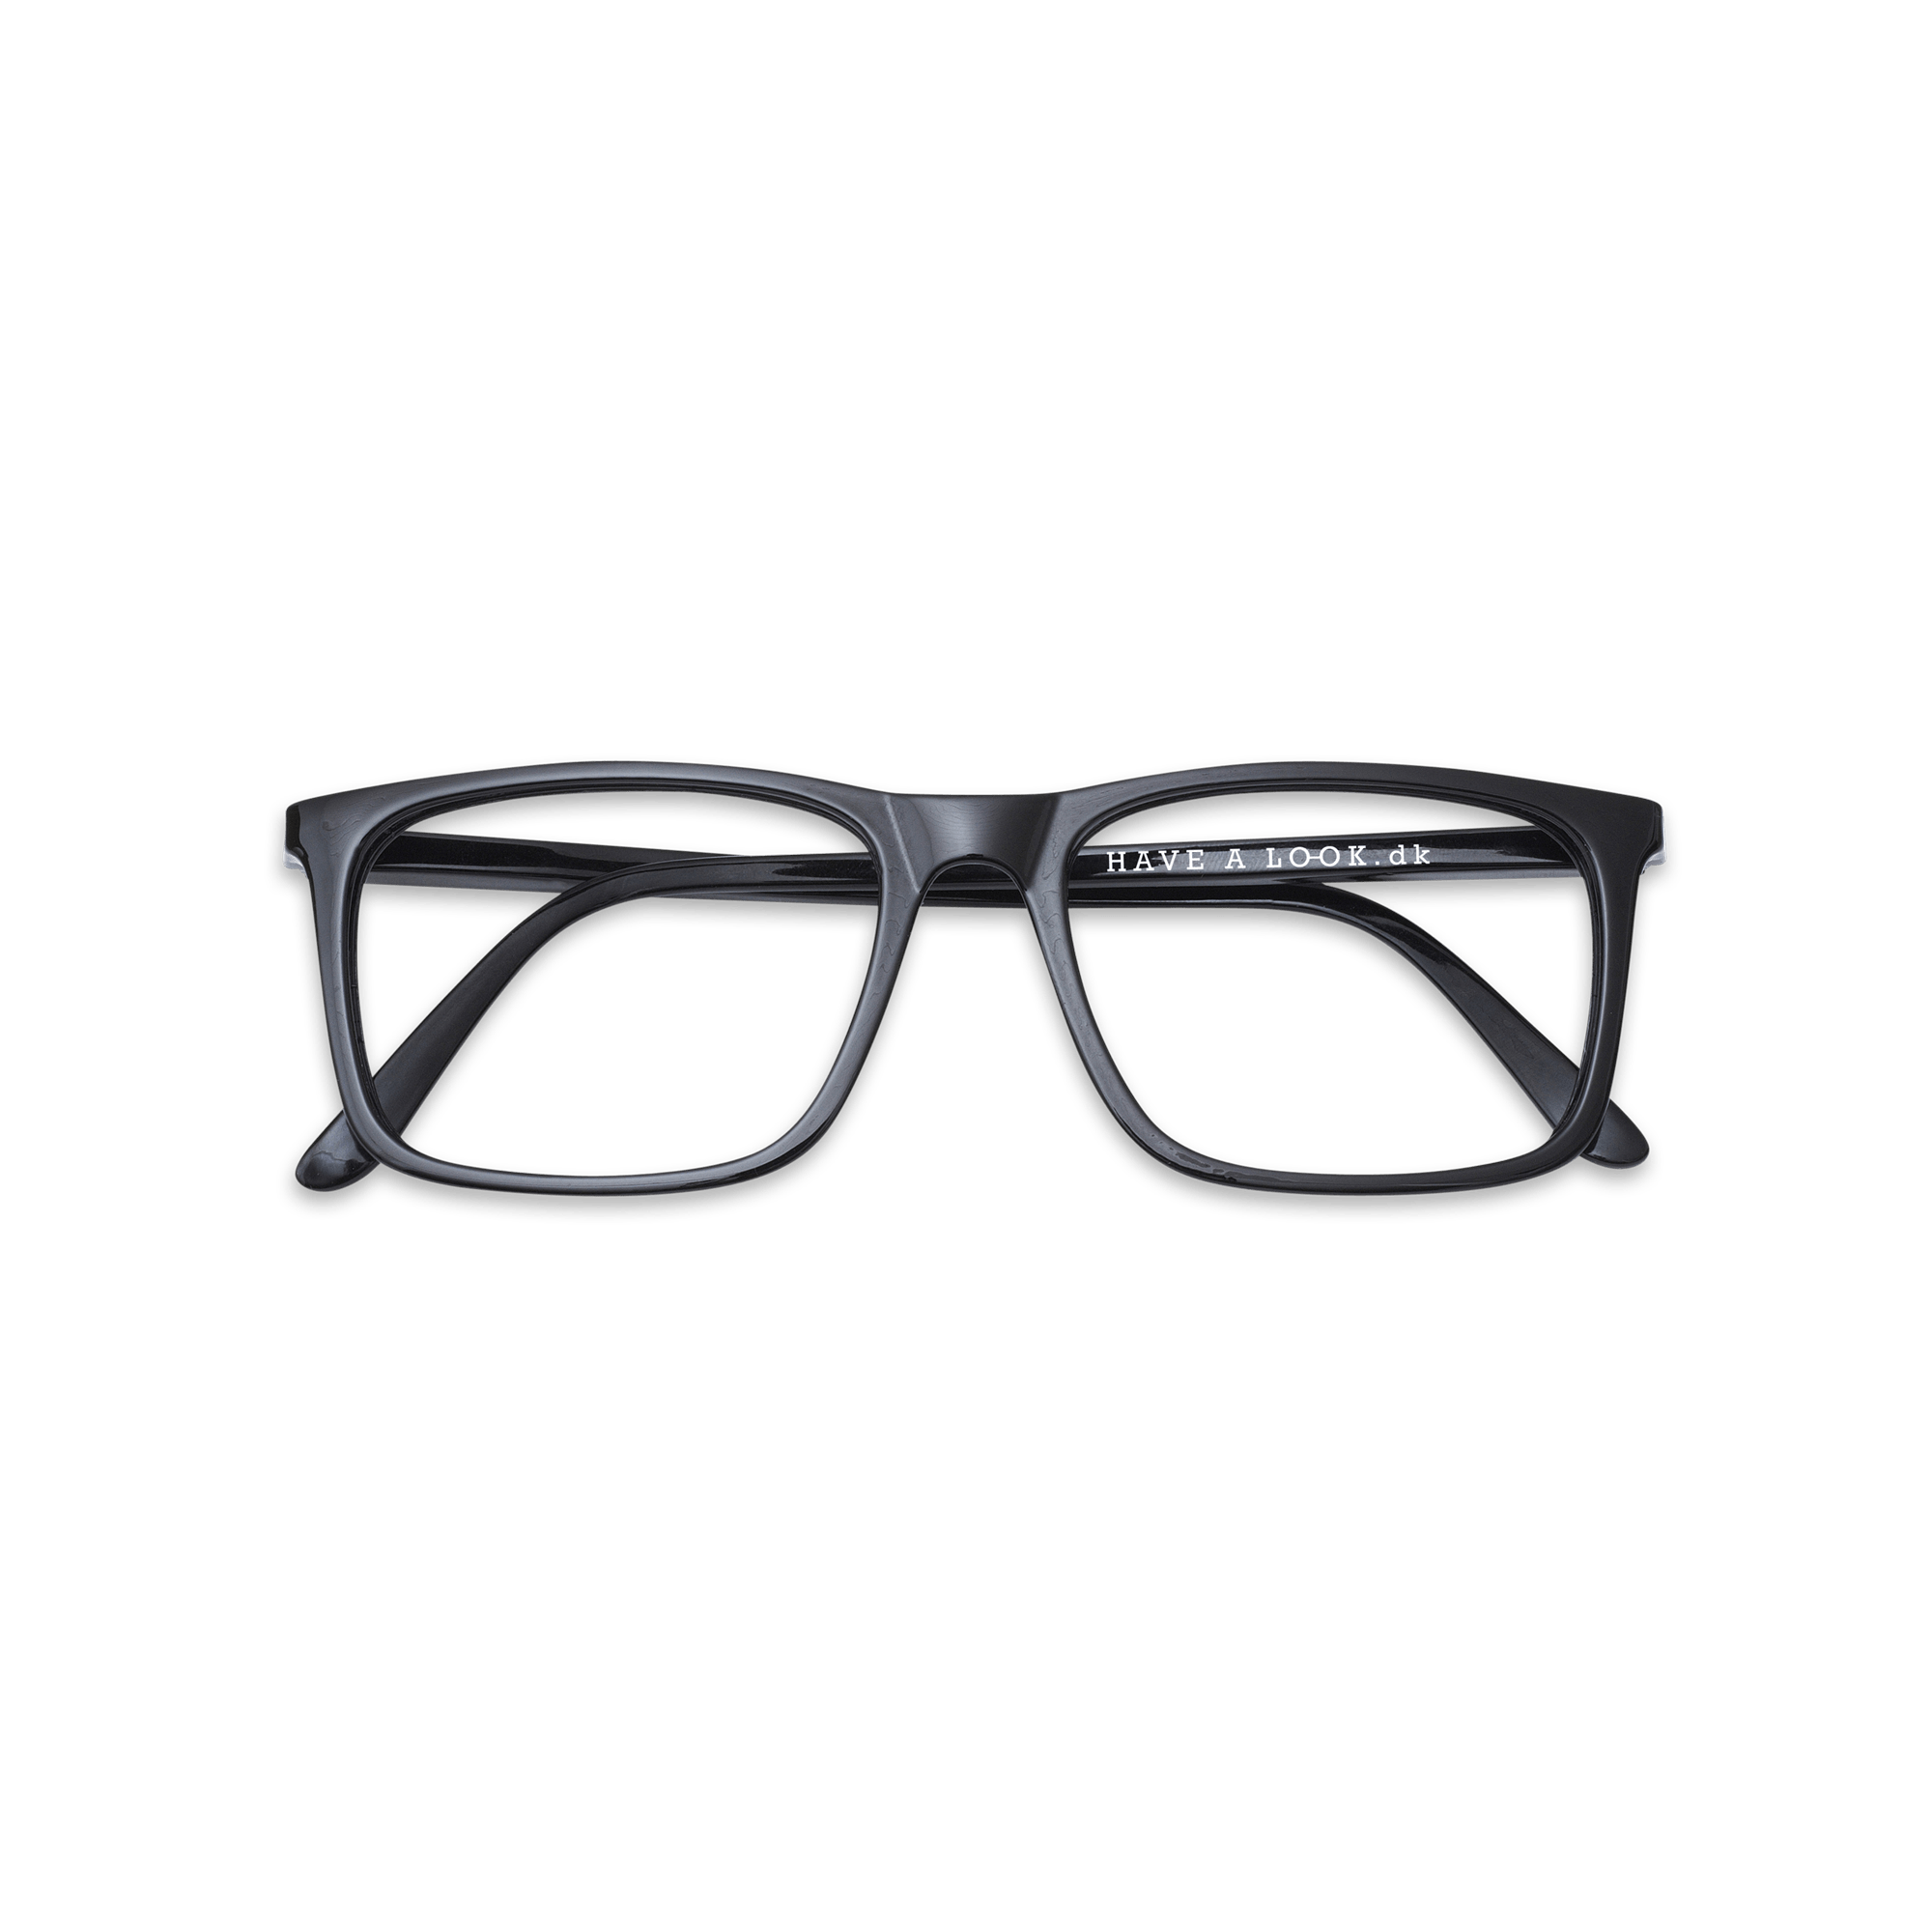 Reading glasses Type A - black